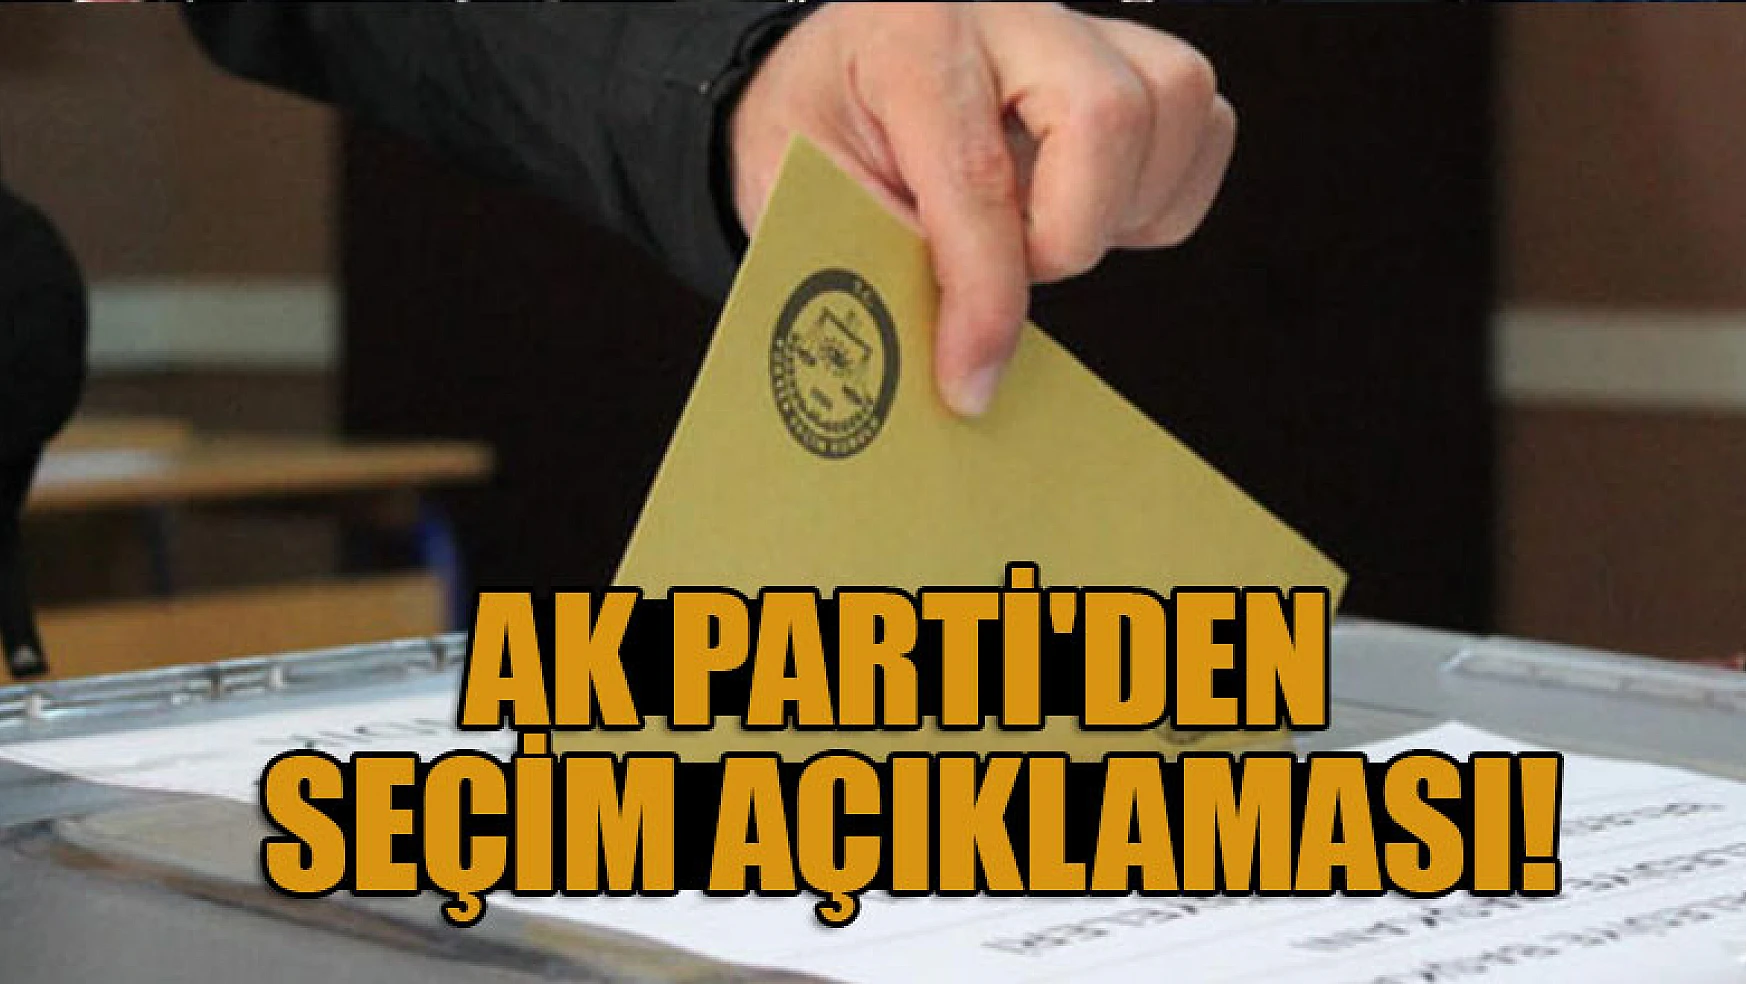 AK Parti'den seçim açıklaması!